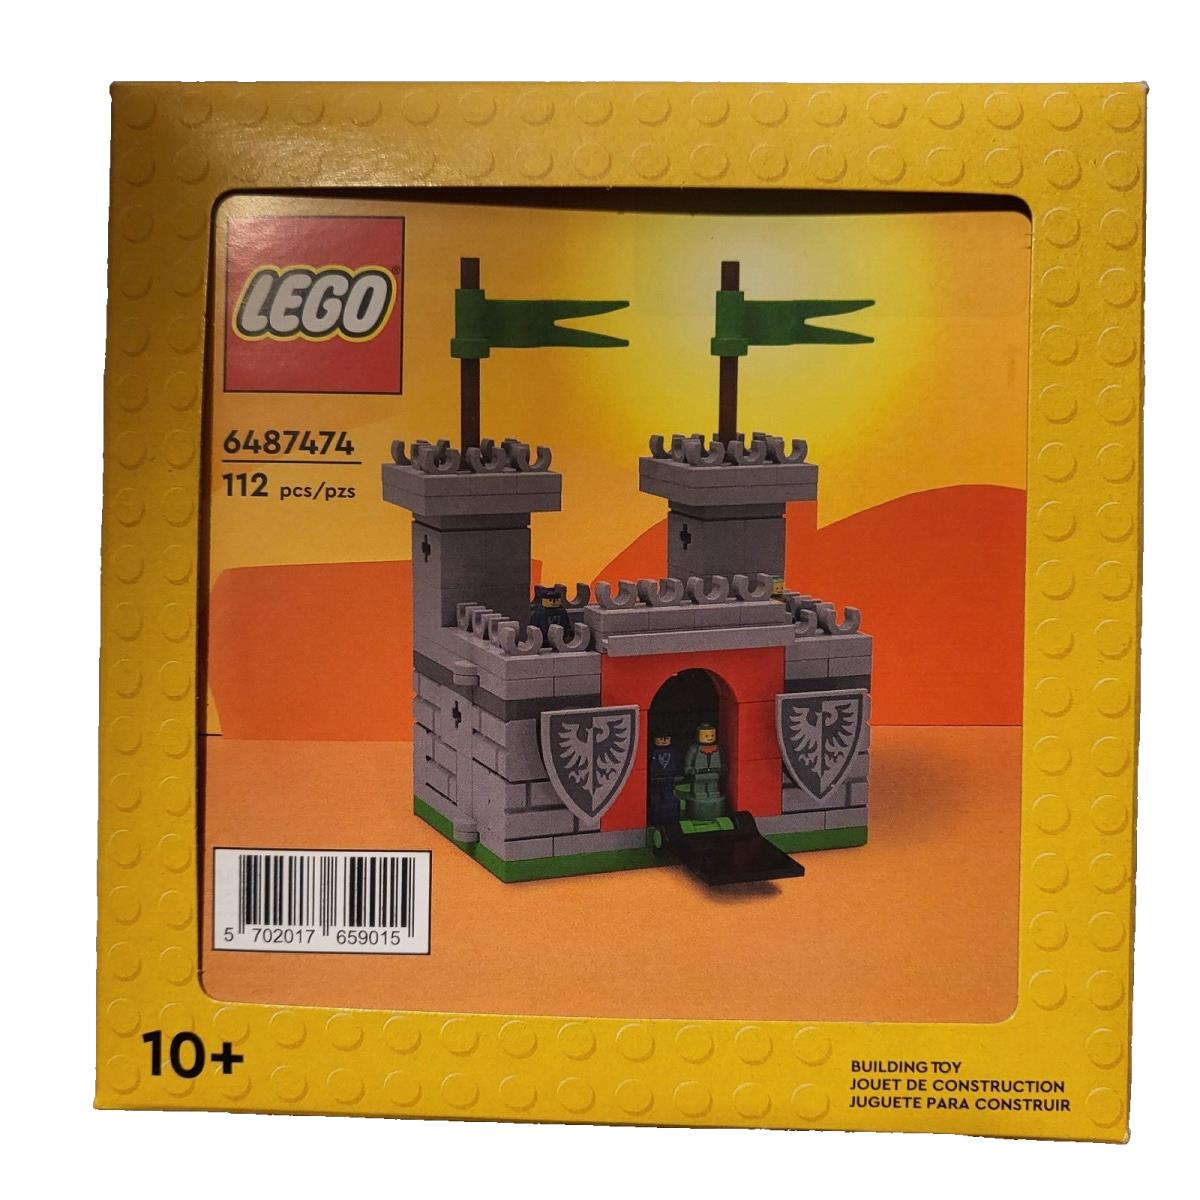 Lego 5008074 Grey Castle Set Vip Insiders Limited Edition 6487474 Black Friday - Black, Grey